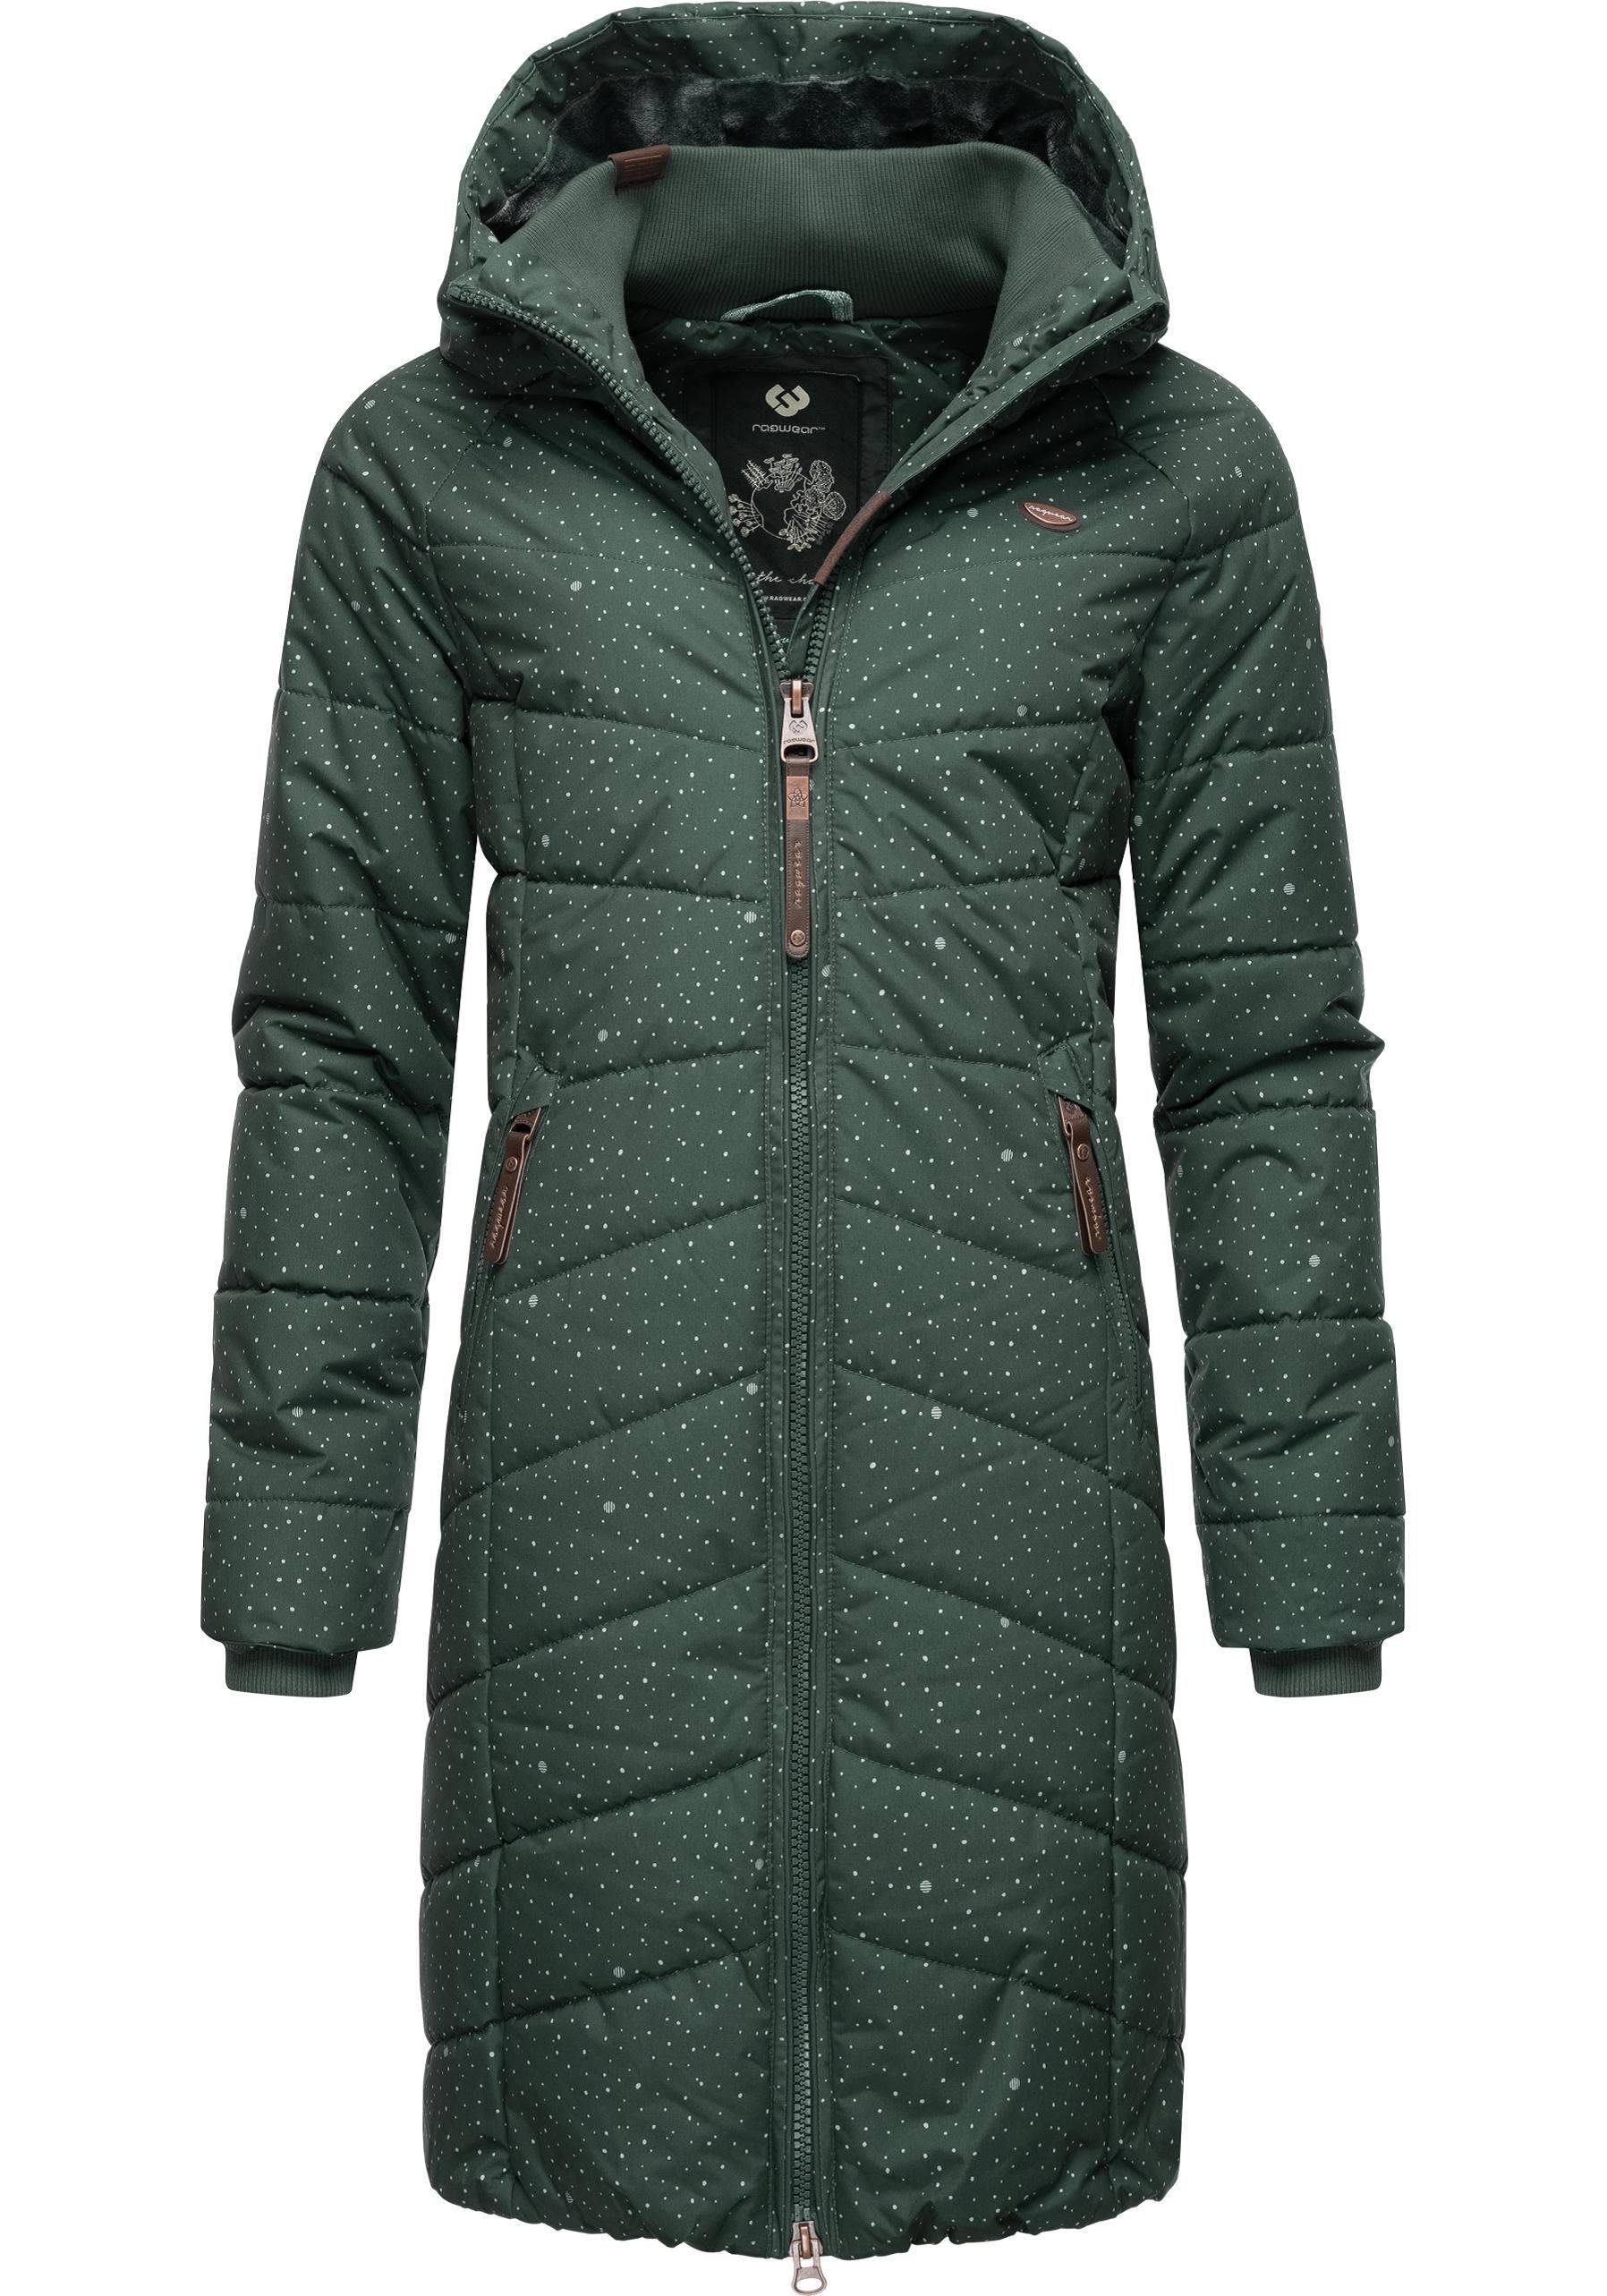 Winterparka gesteppter dunkelgrün stylischer, Dizzie Print Kapuze Steppmantel mit Coat Ragwear